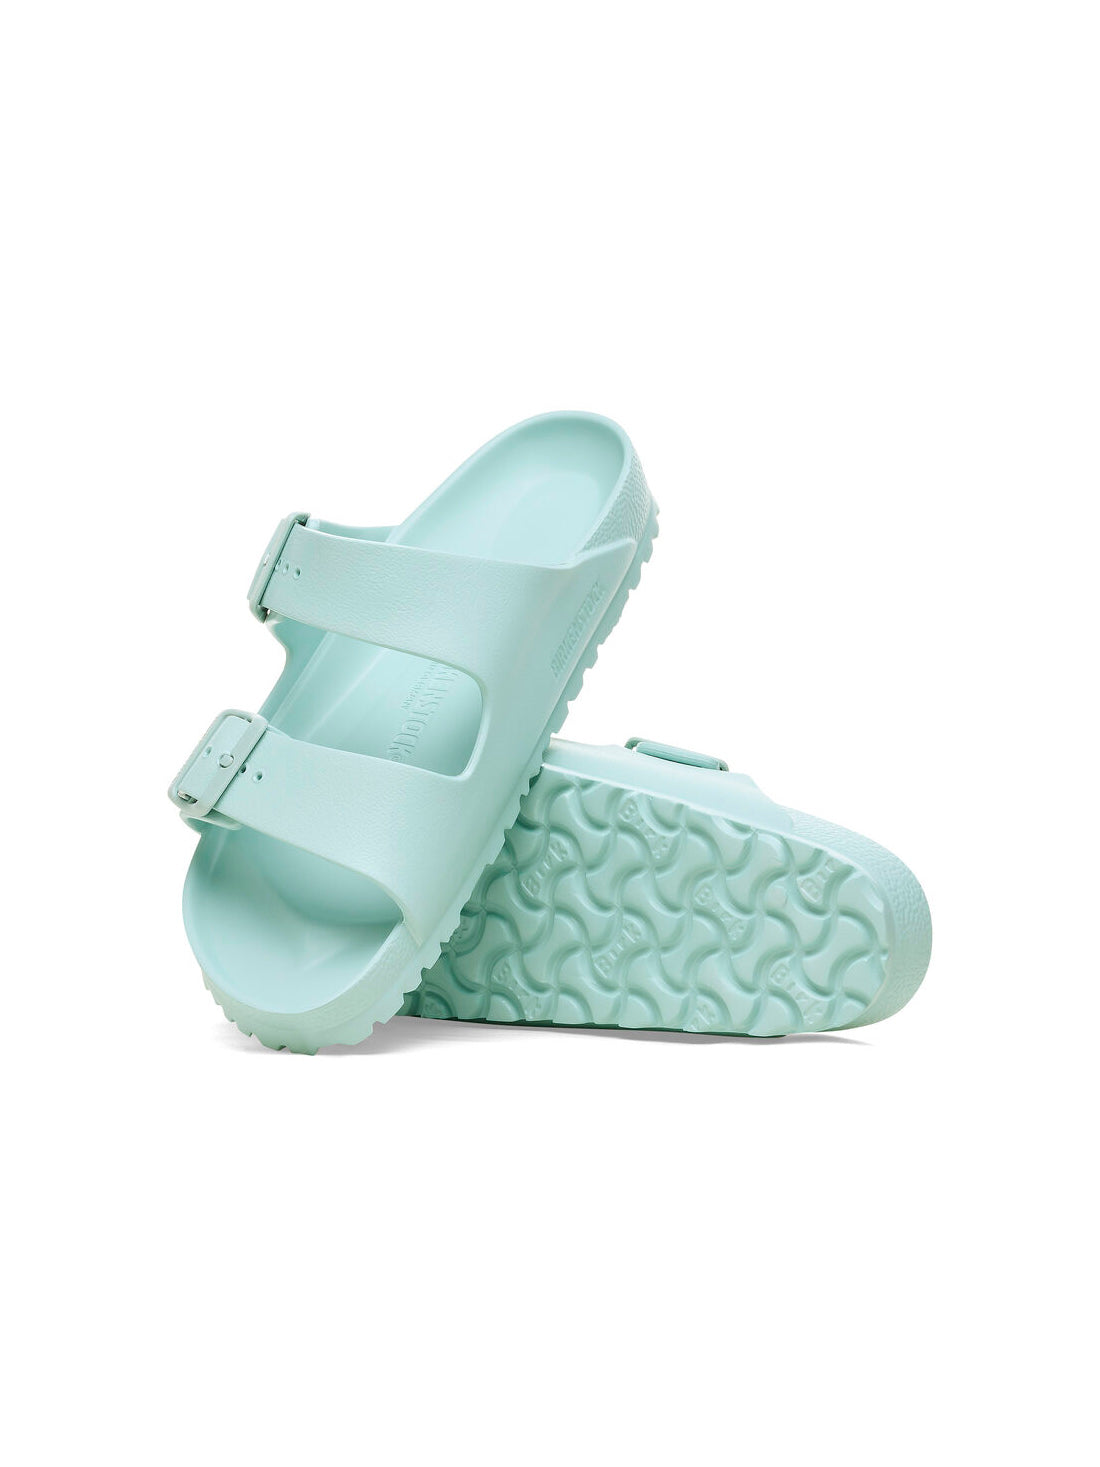 birkenstock arizona essentials eva sandal in surf green